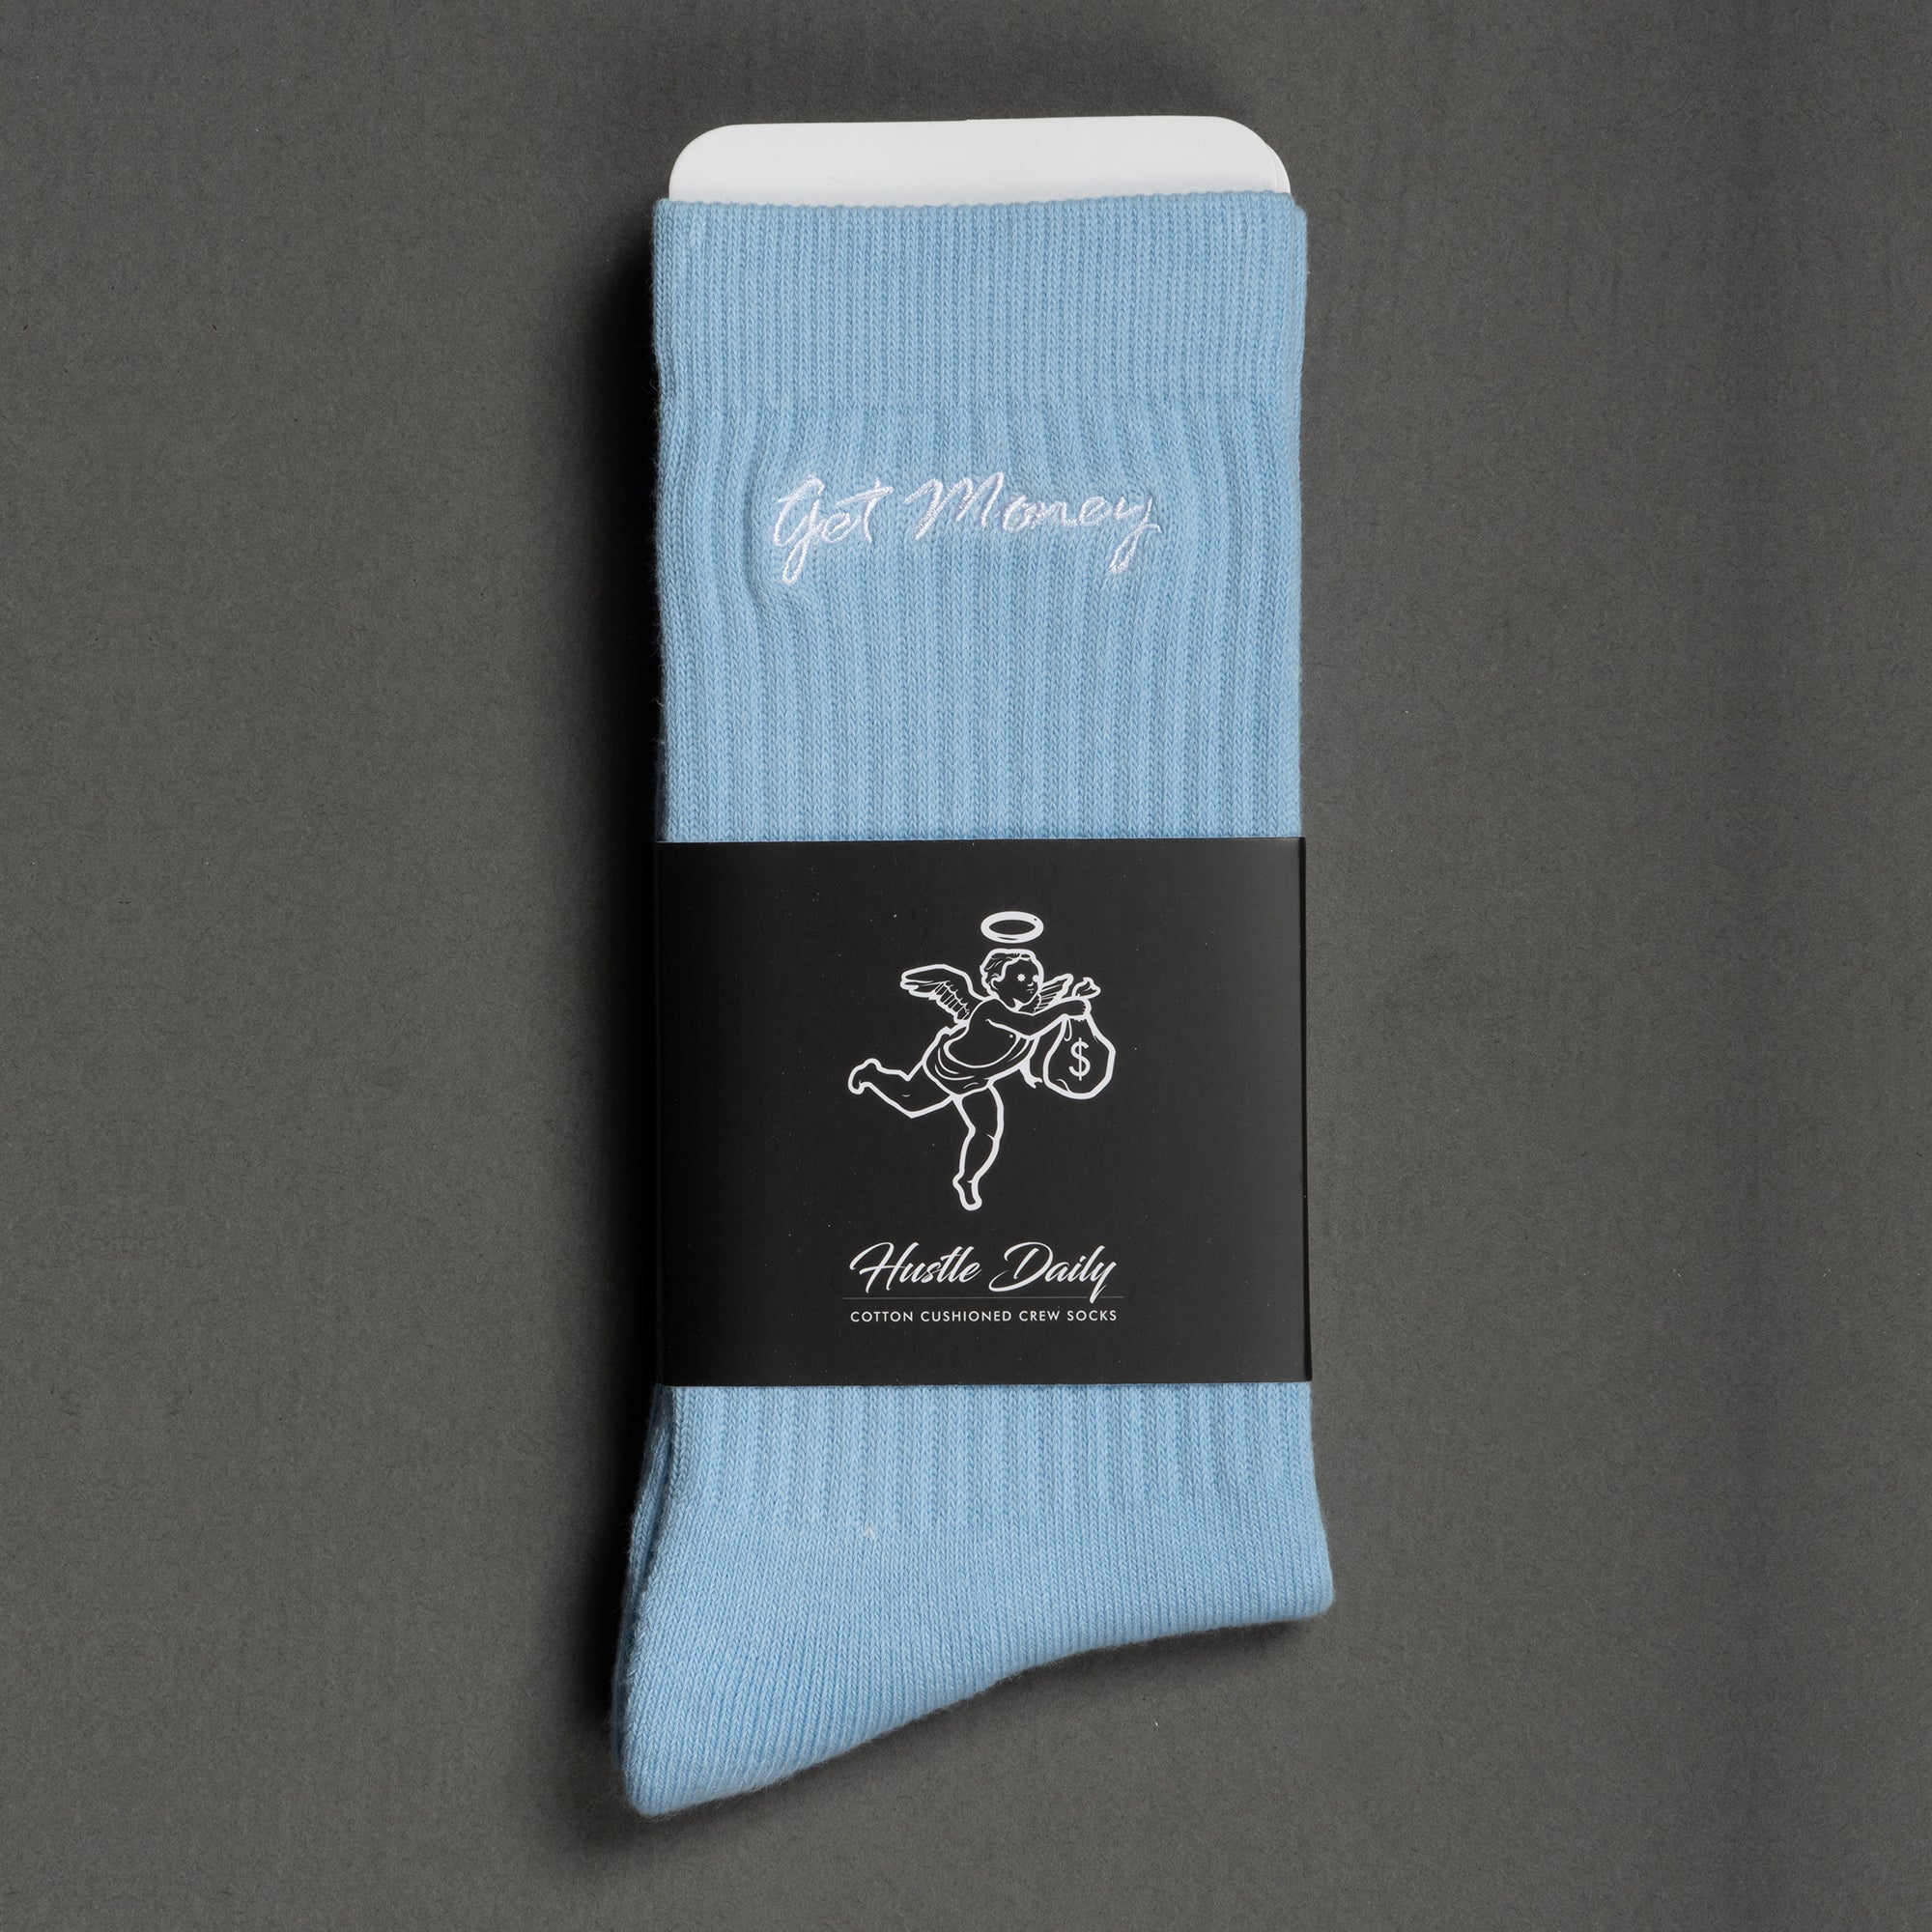 Get Money Socks - Blue